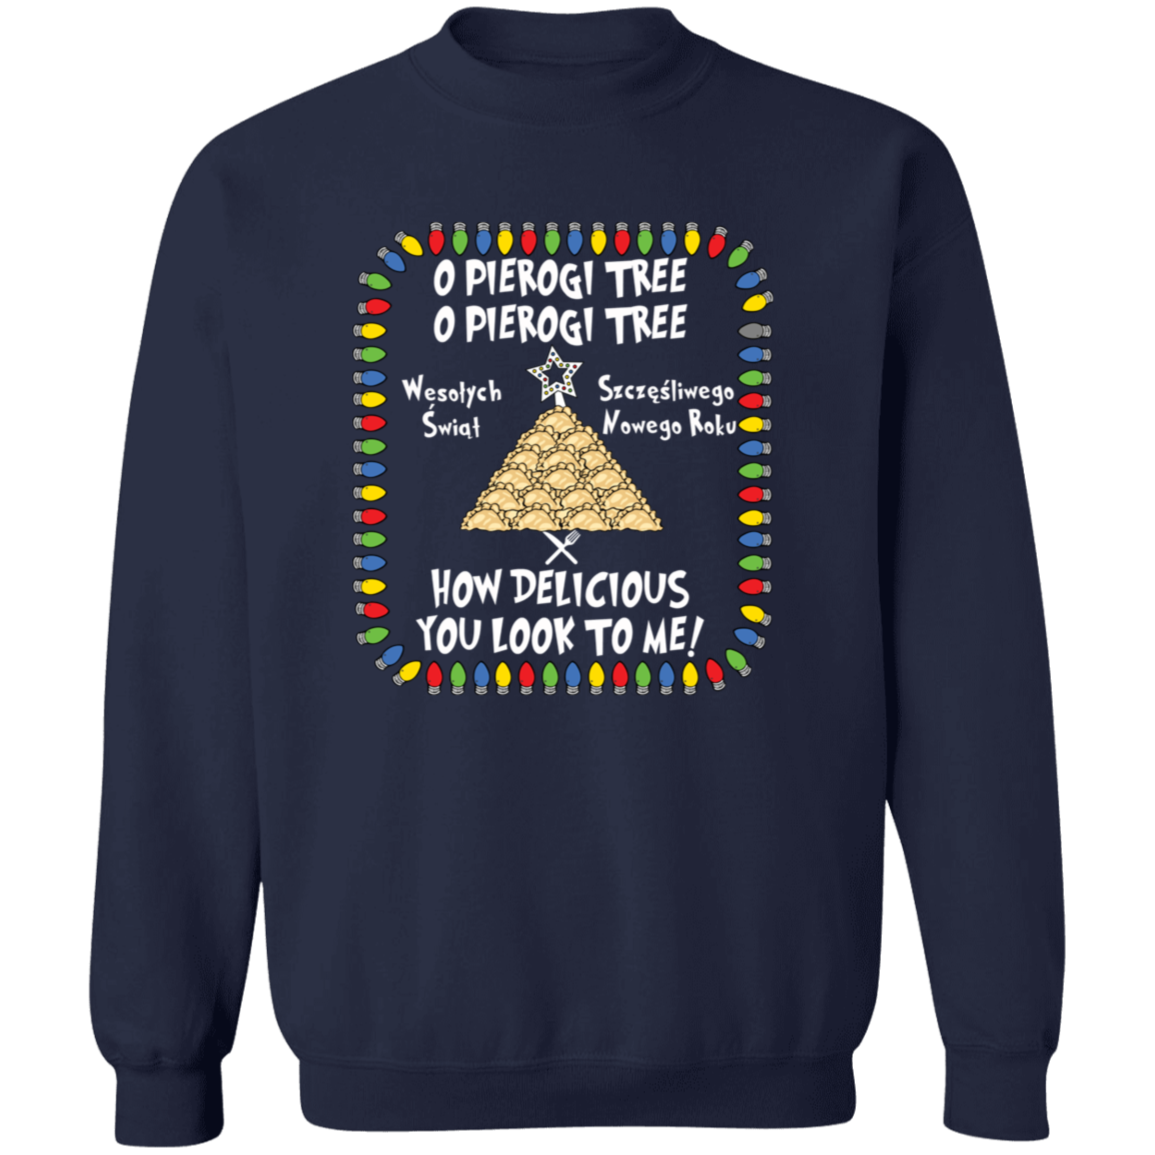 O Pierogi Tree Sweatshirt - How Delicious You Look To Me Sweatshirts CustomCat Navy S 